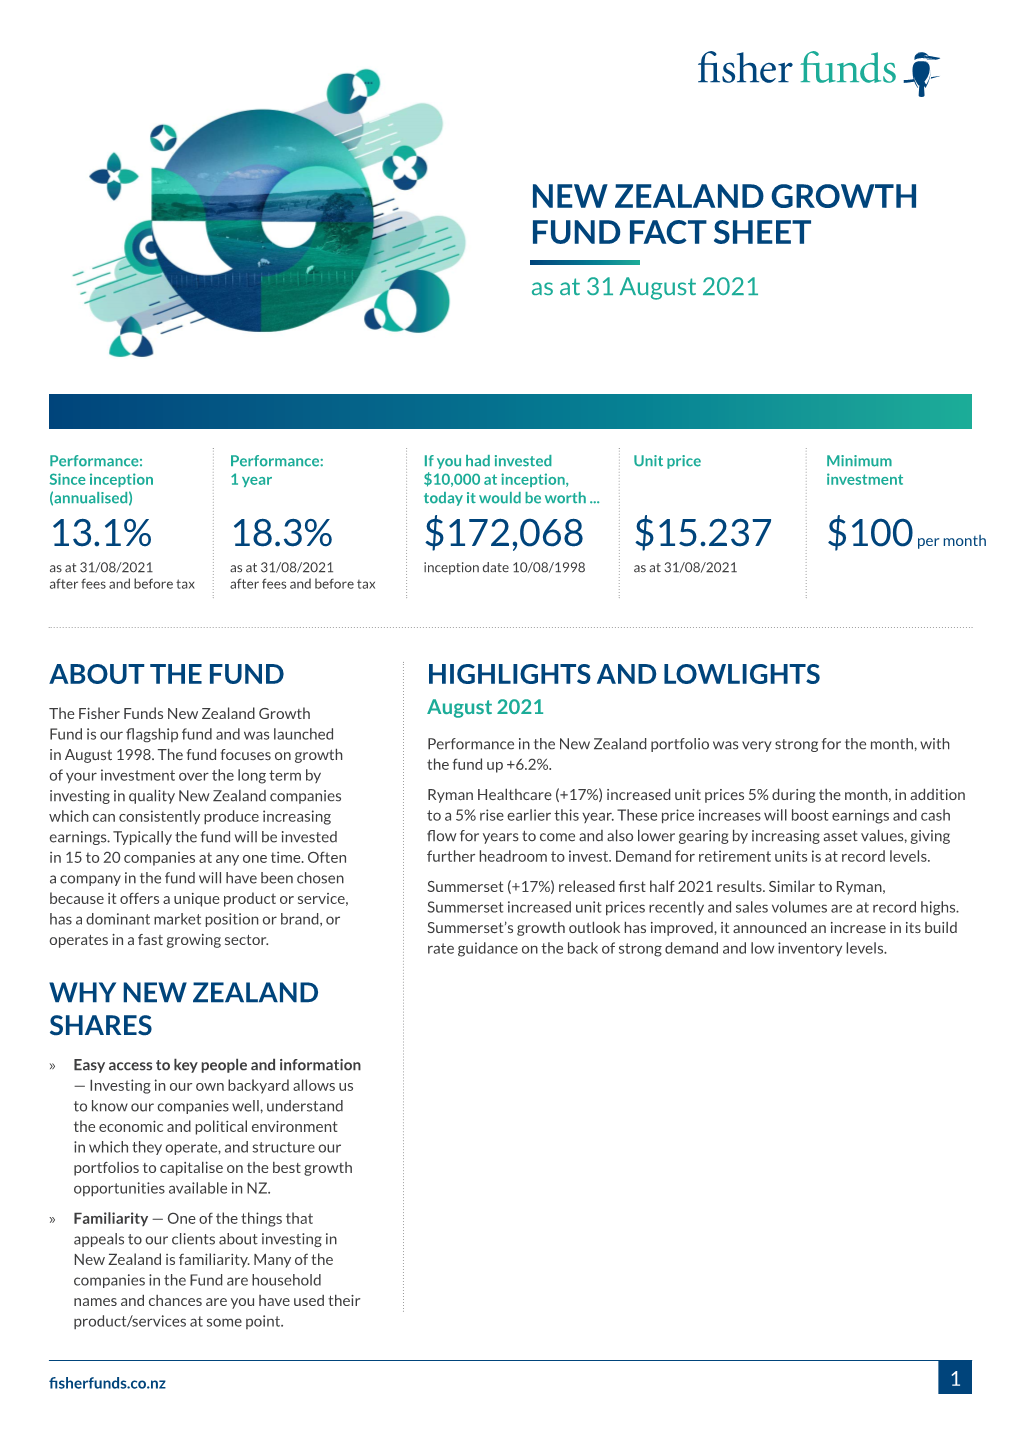 New Zealand Growth Fund Fact Sheet